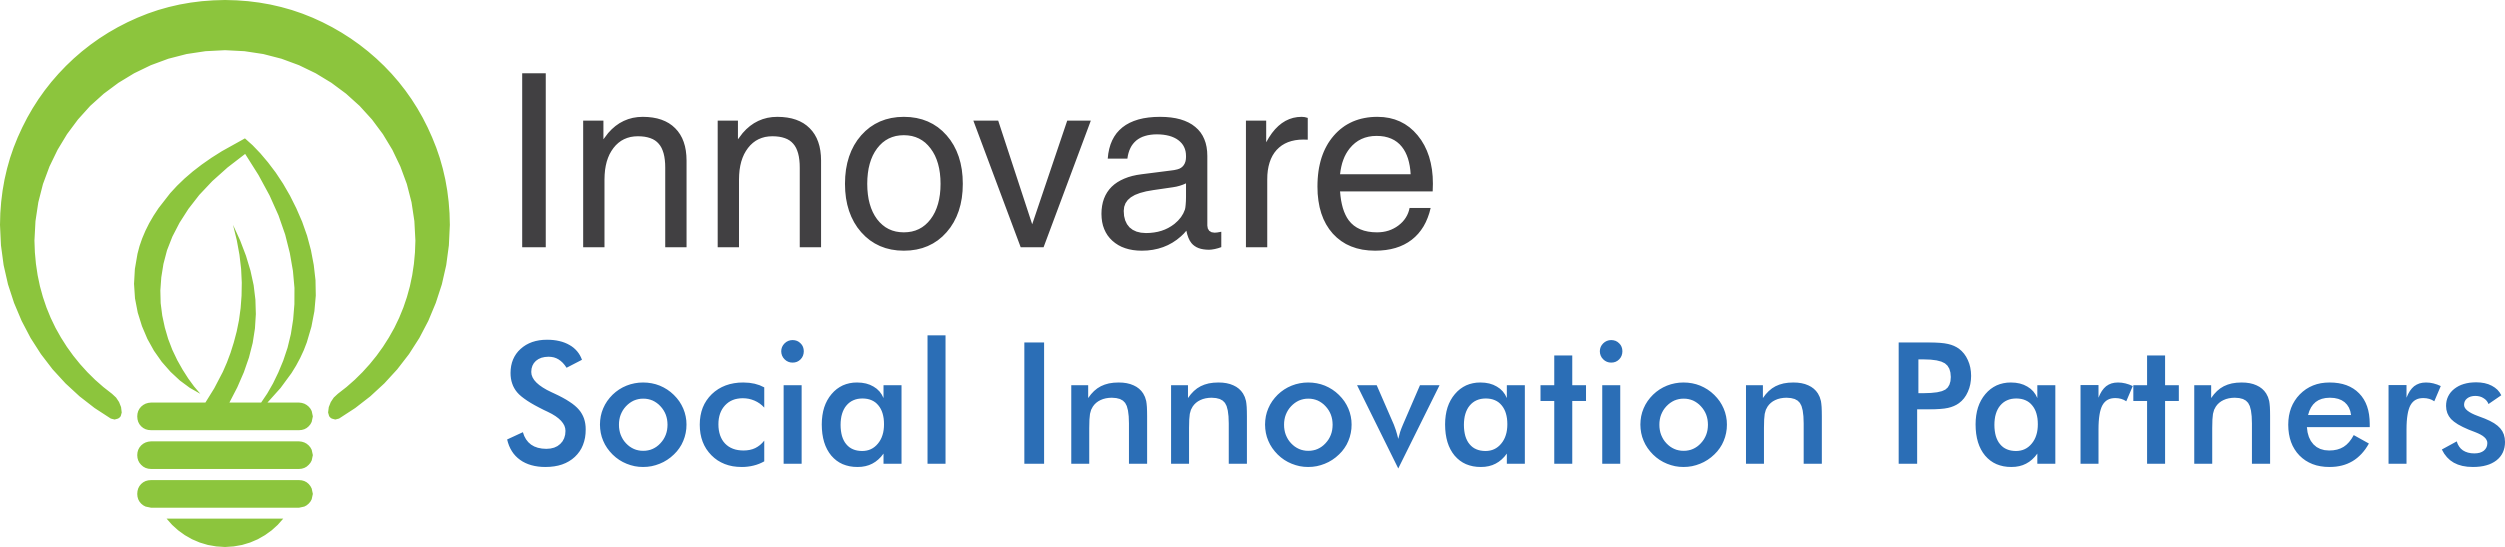 Innovare logo horizontal